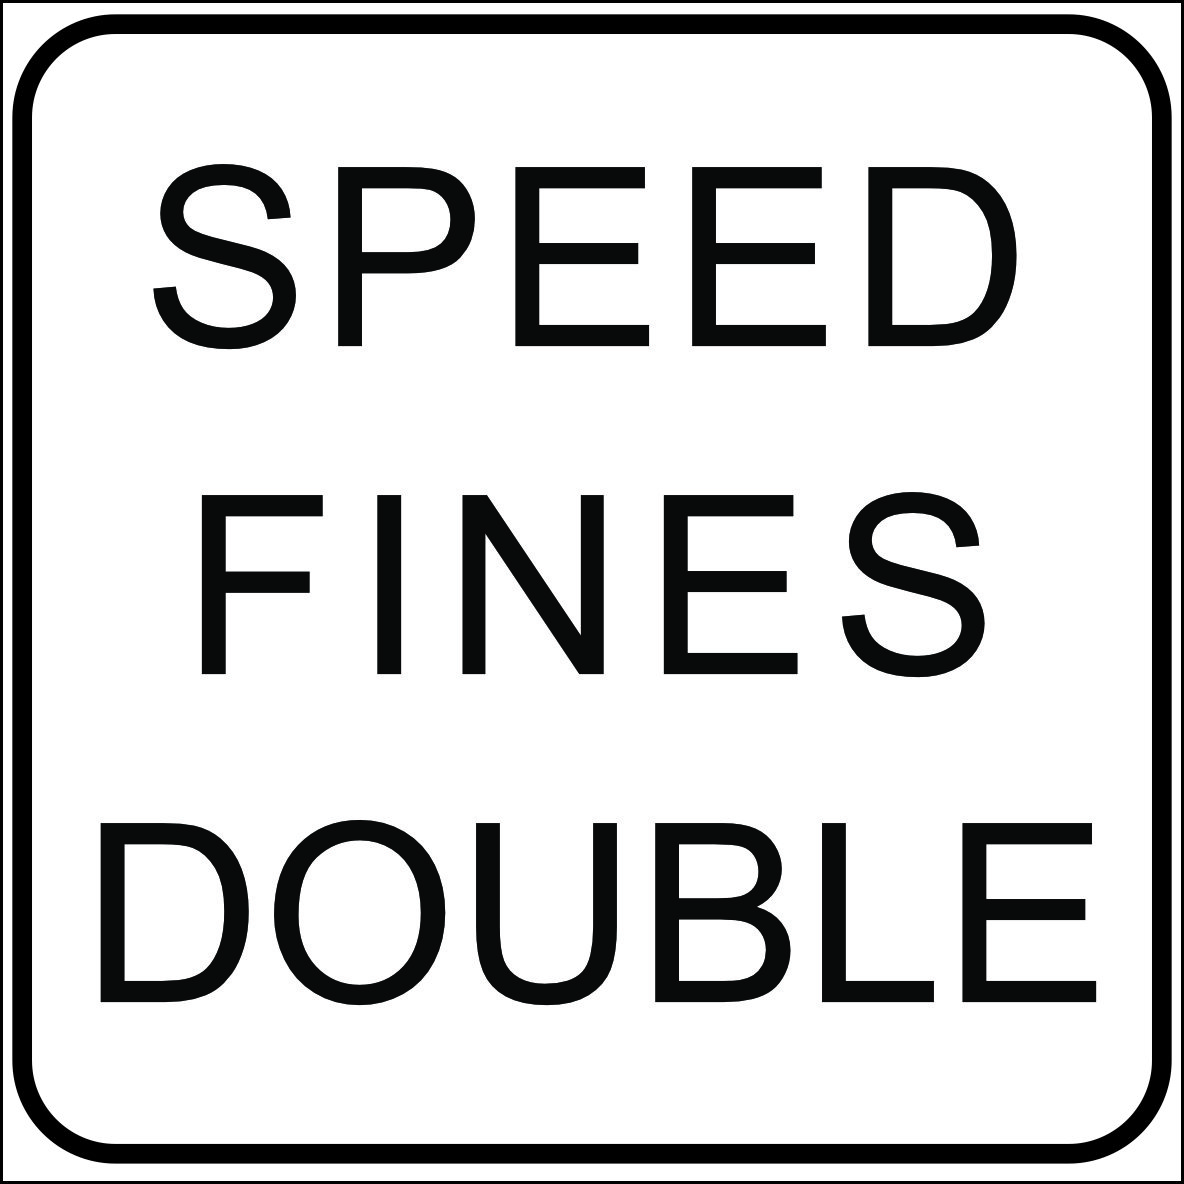 Speed fines double